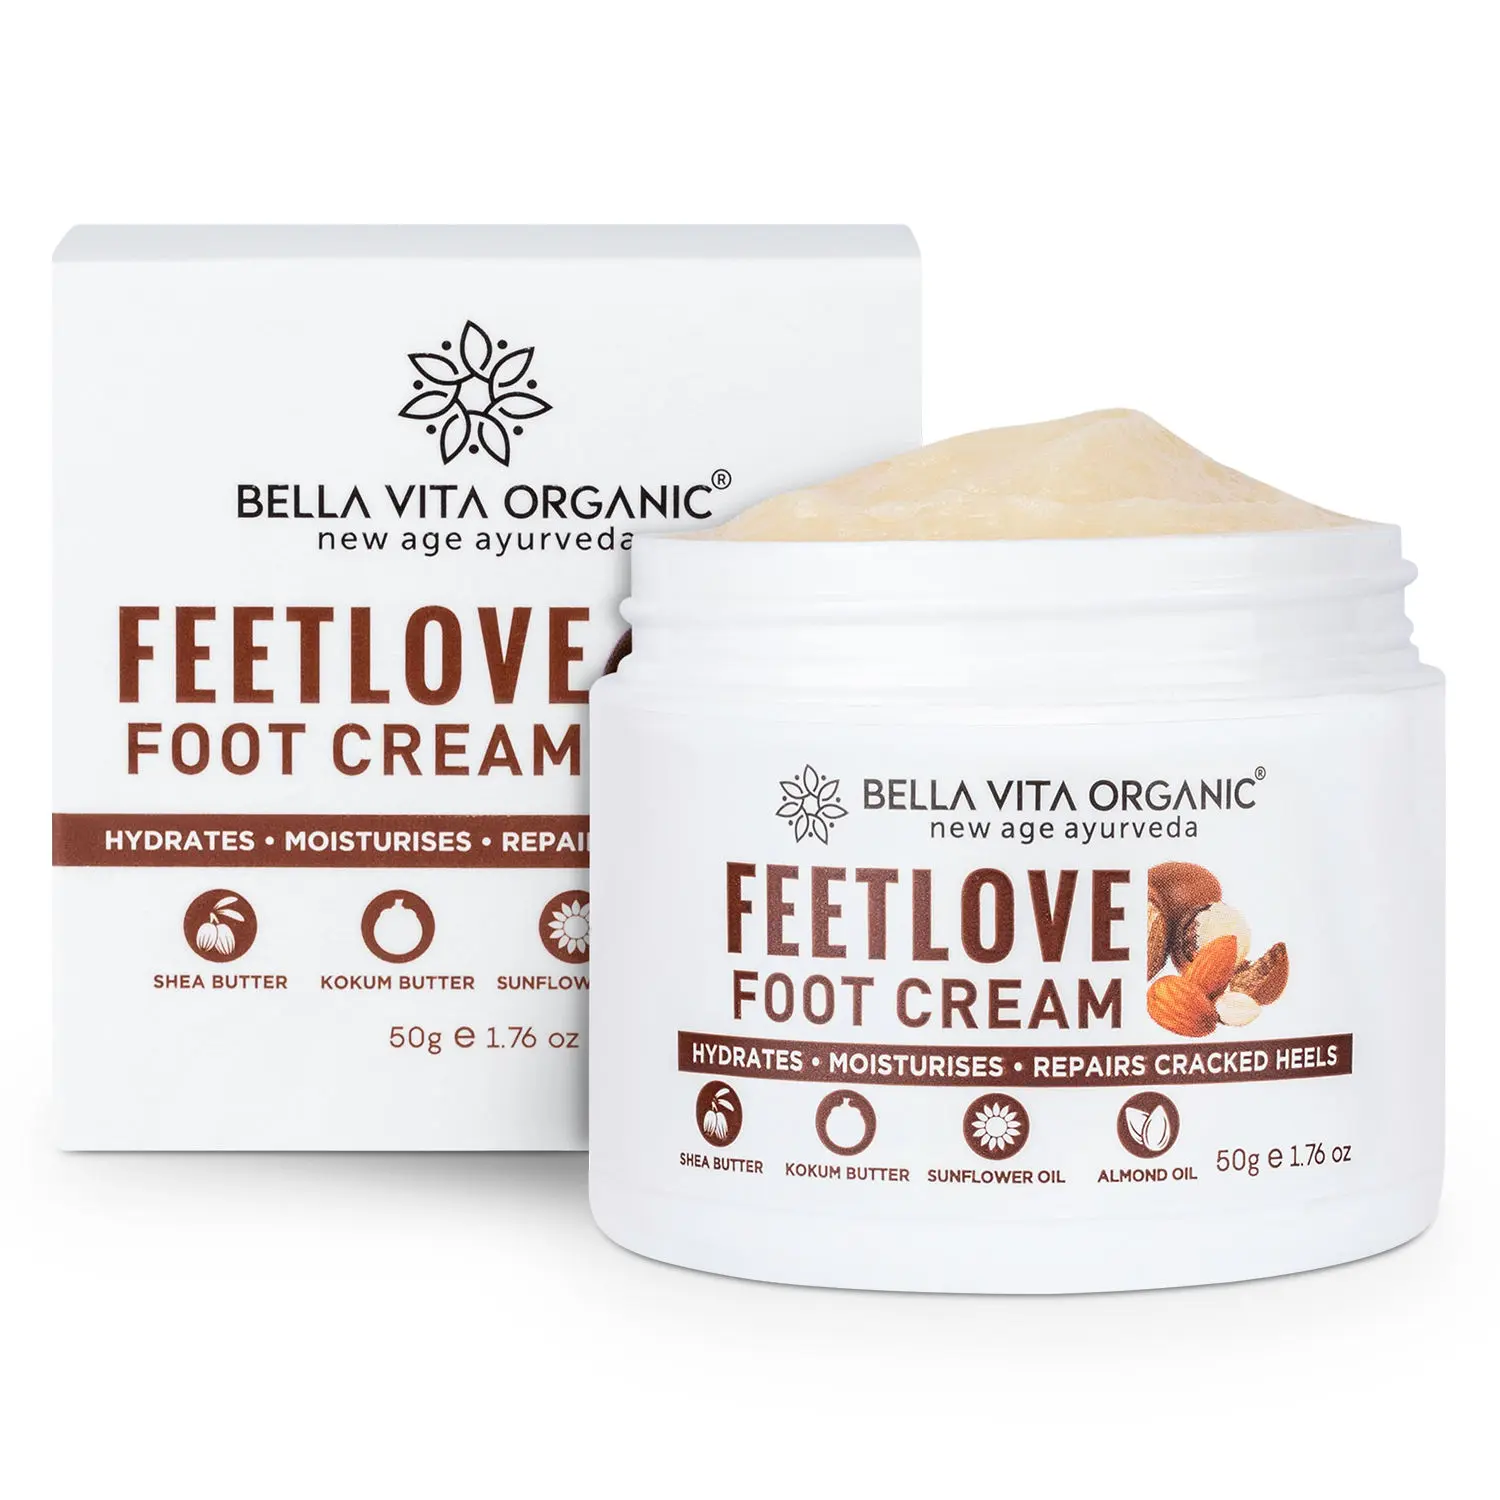 Bella Vita Organic Feet Love Foot Cream for Hydrating, Moisturizing and Repairing of Cracked Heels 50 gm